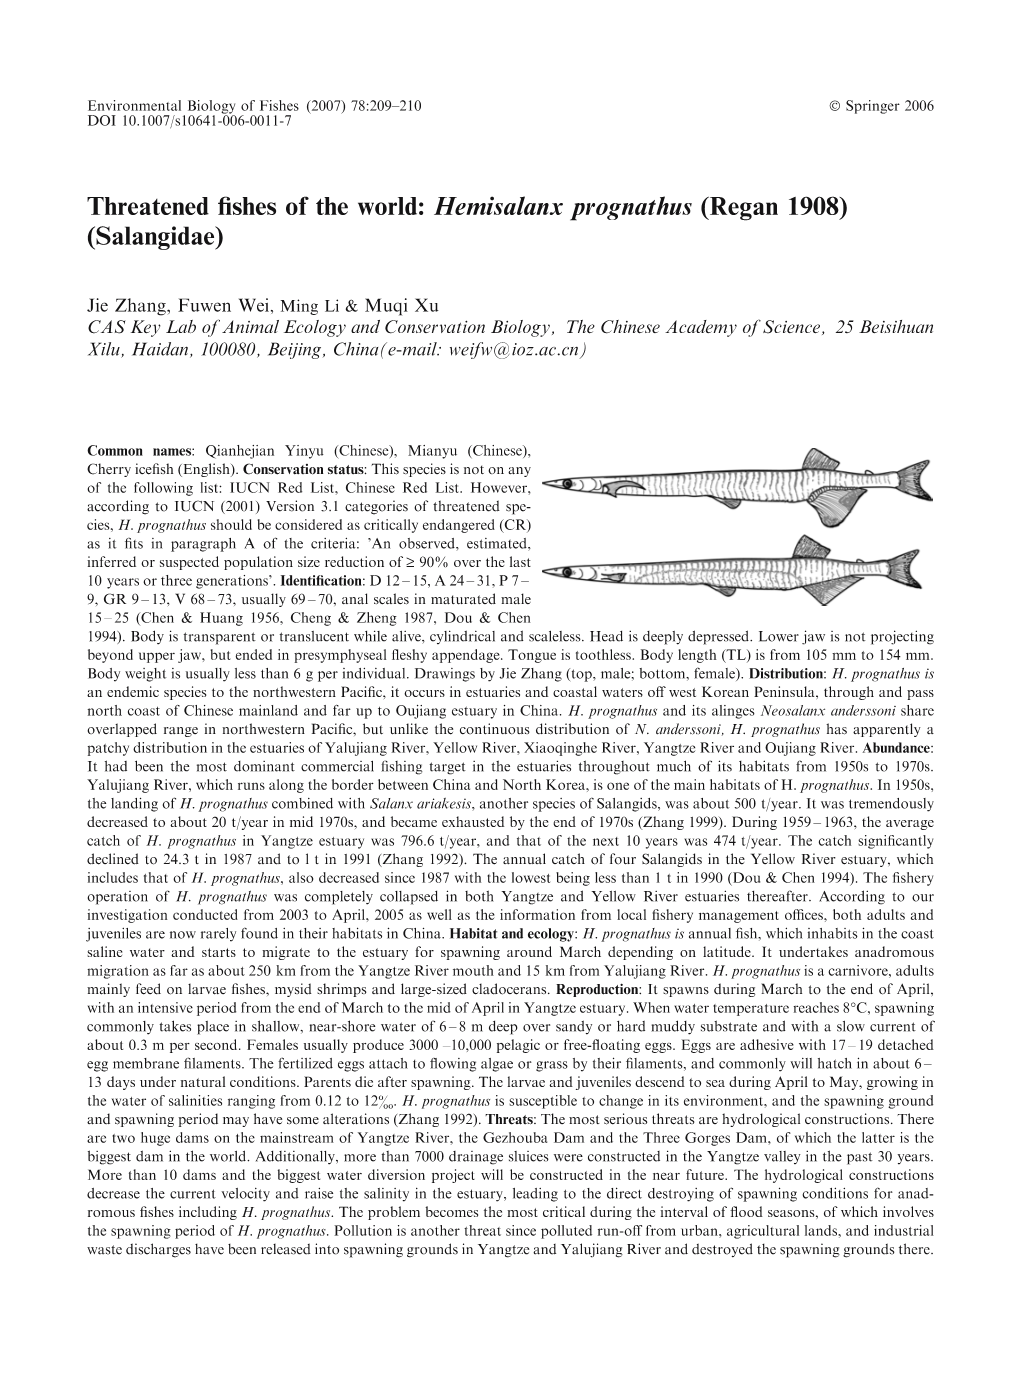 Threatened Fishes of the World: Hemisalanx Prognathus (Regan